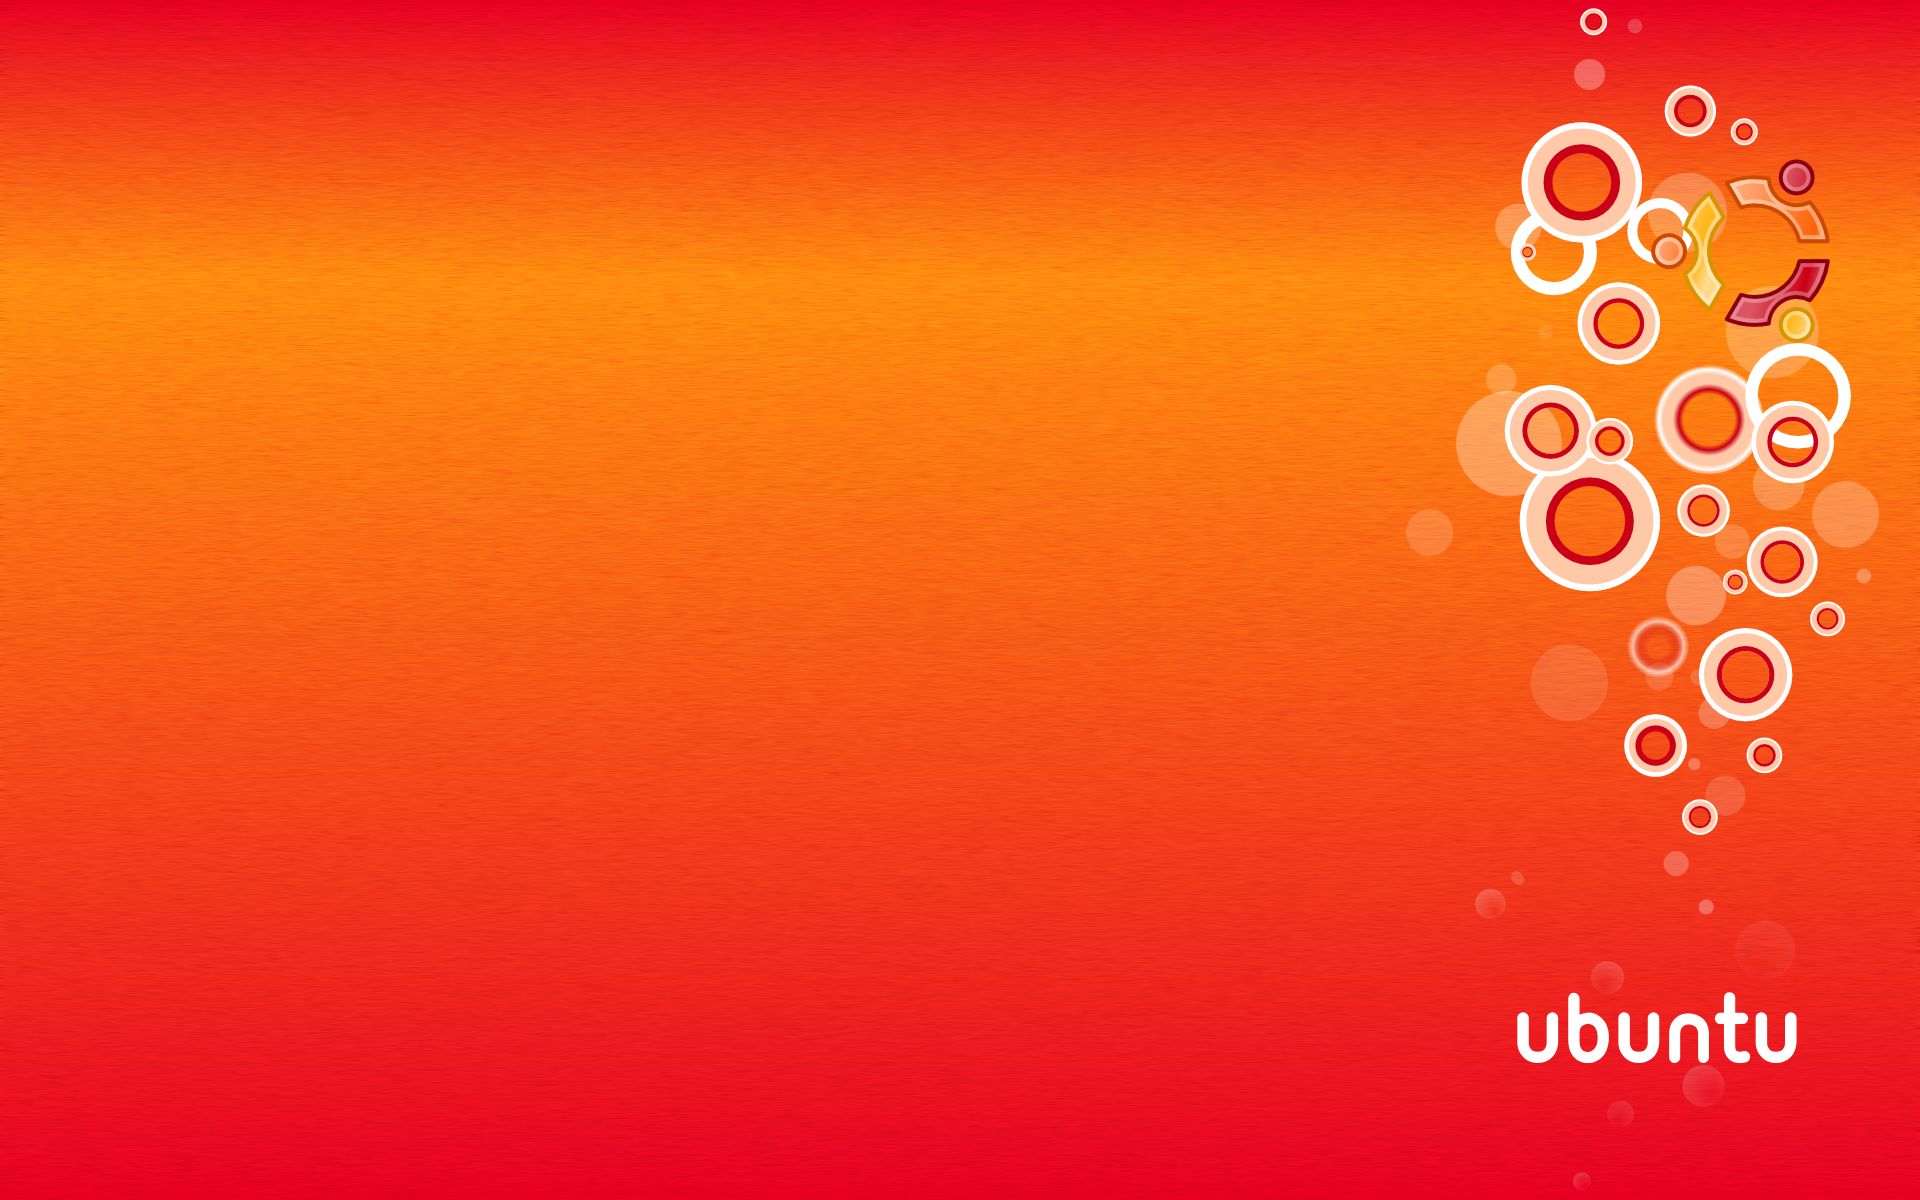 ubuntu wallpaper,red,orange,yellow,sky,peach